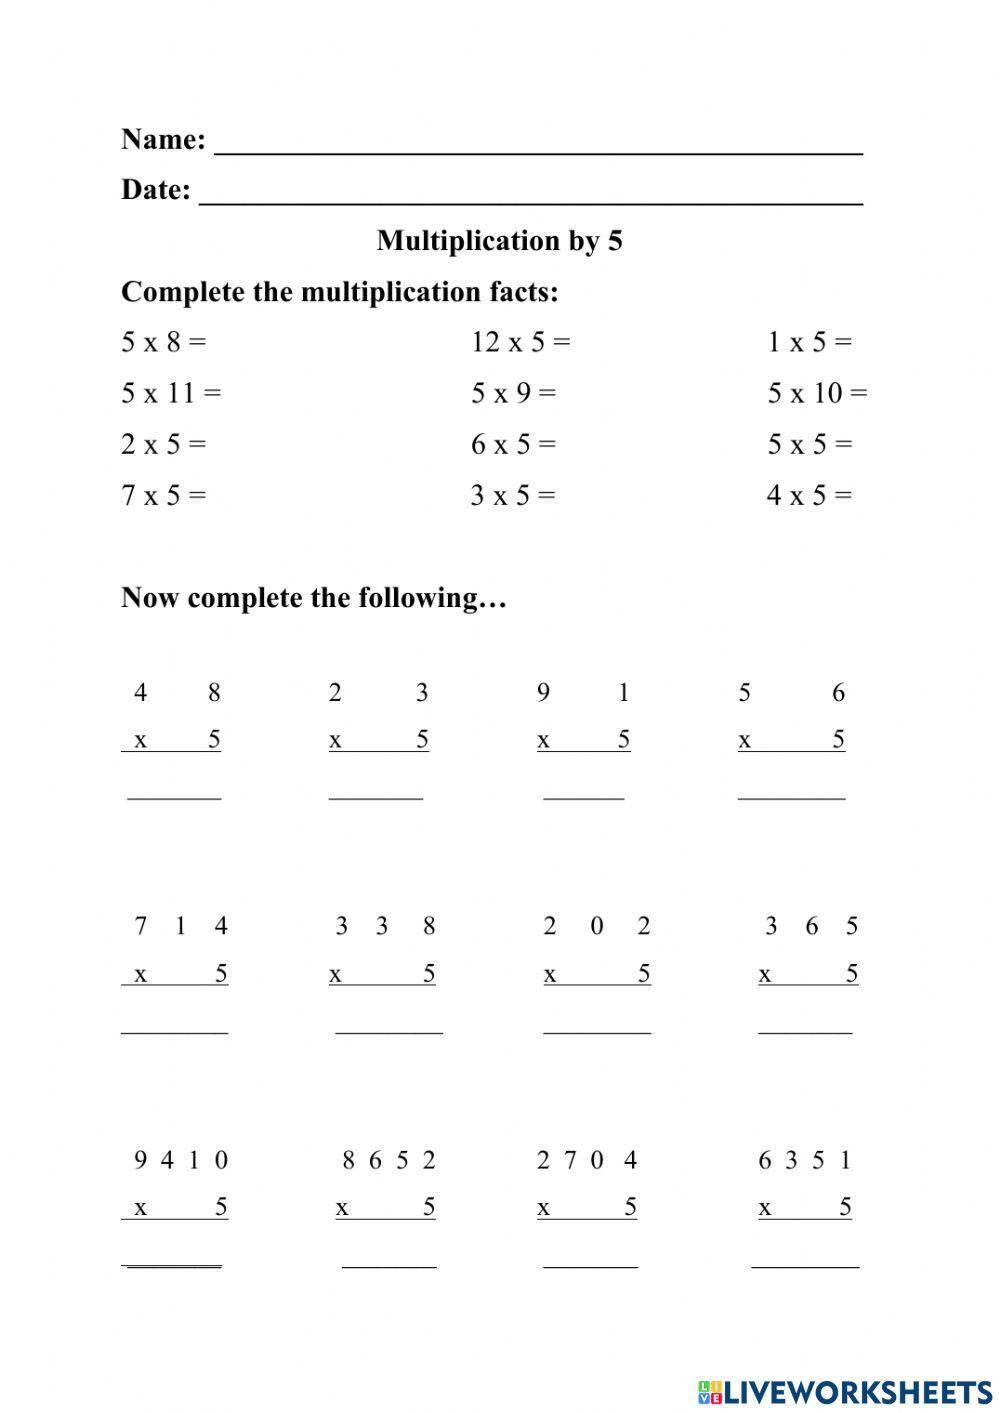 Multiplication by 5 (iii)